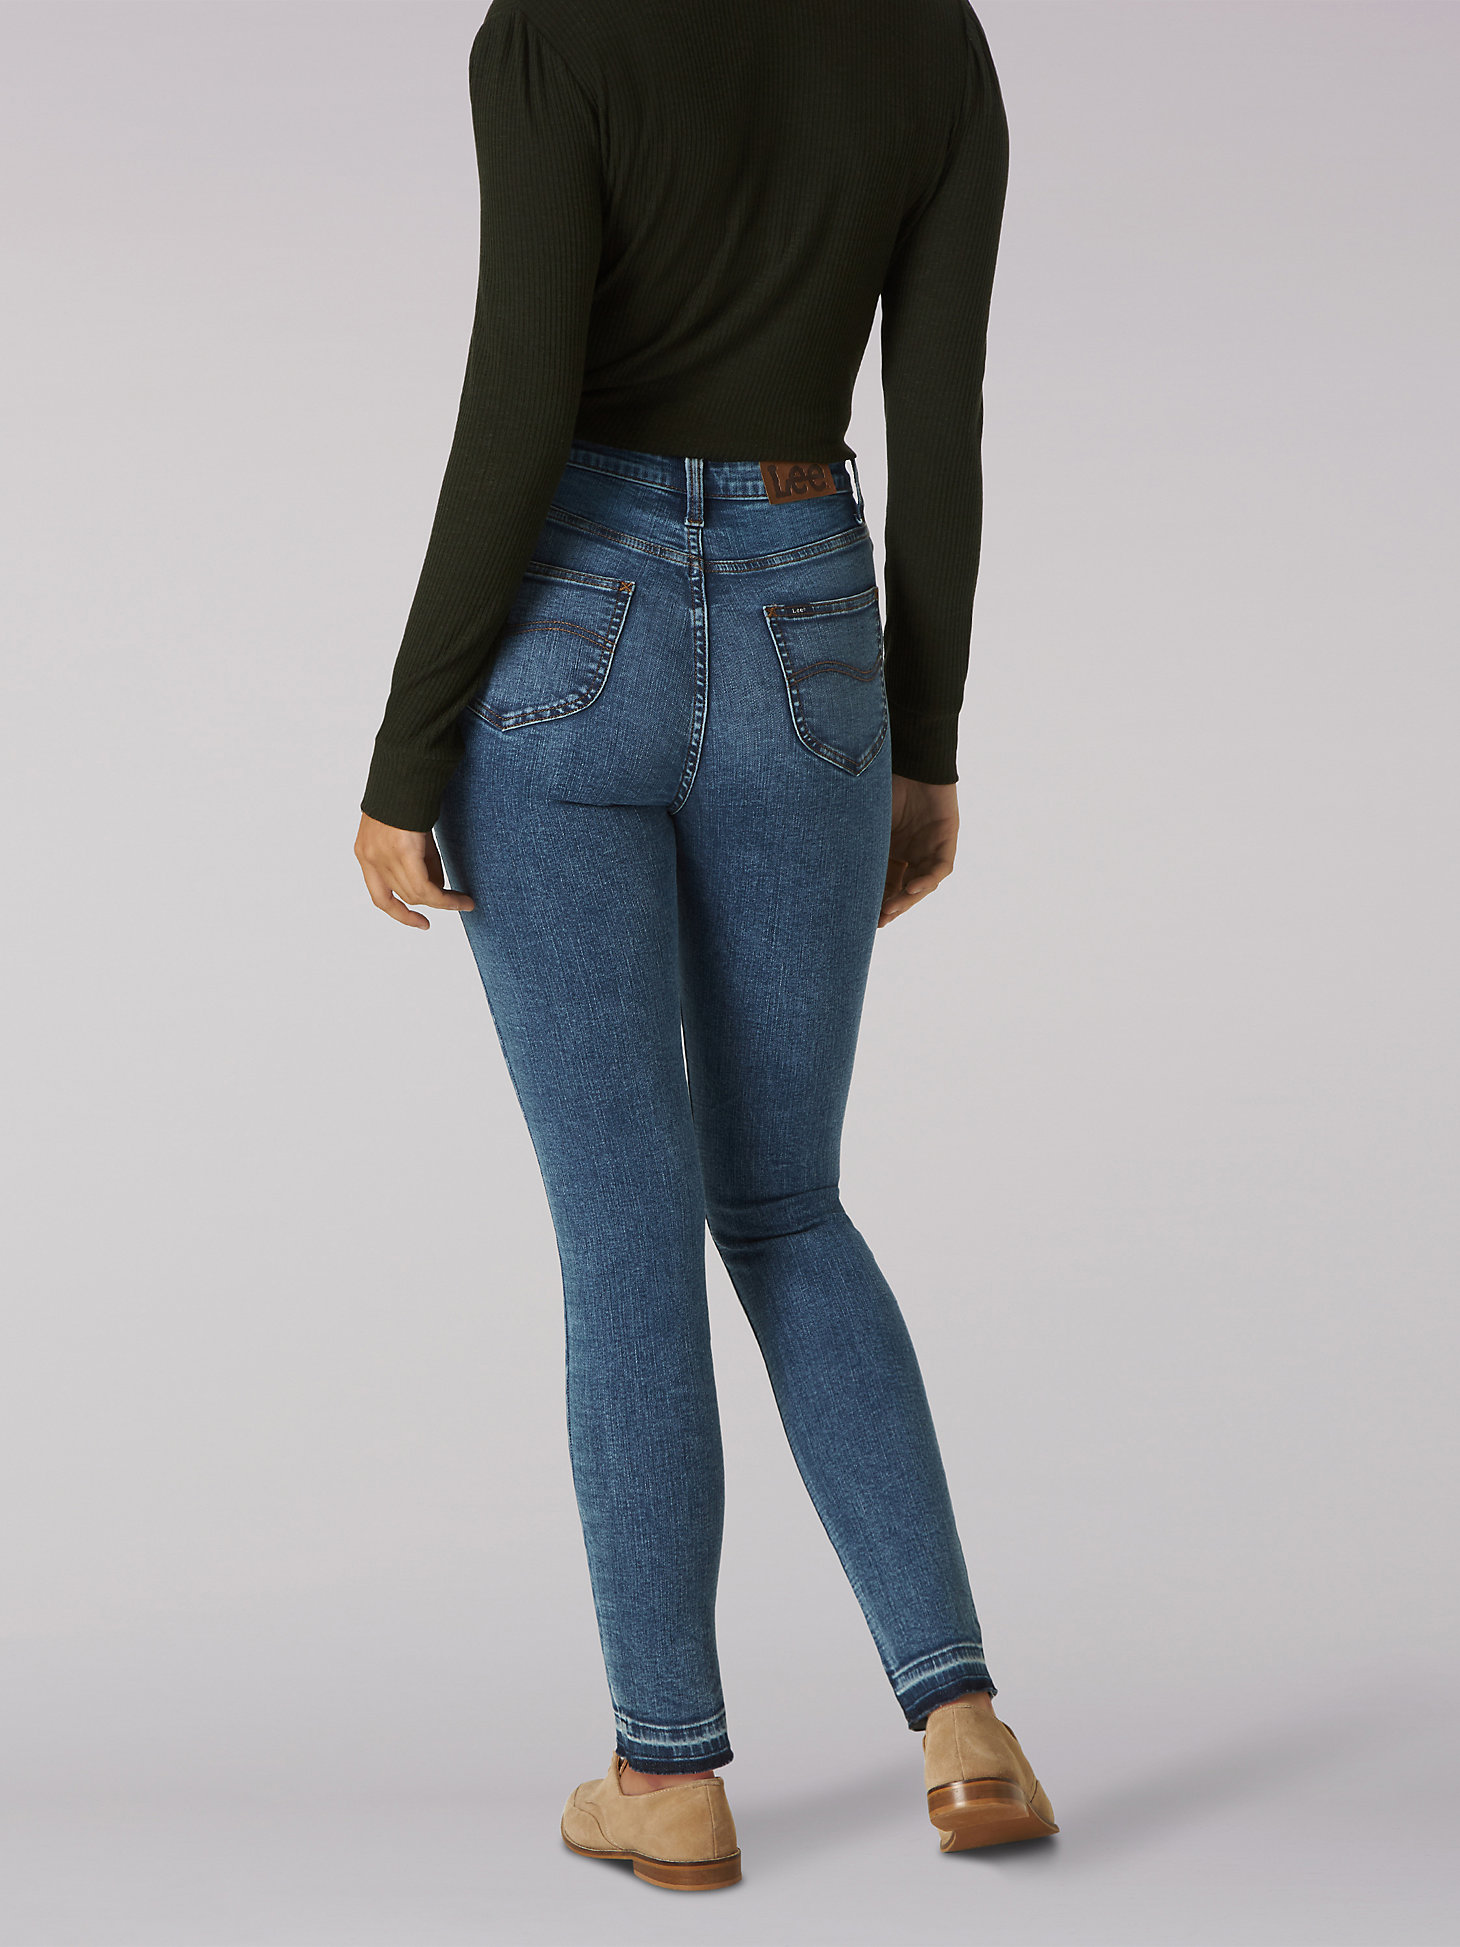 Women's High Rise Slim Fit Skinny Button-Fly Jean in Seattle alternative view 1